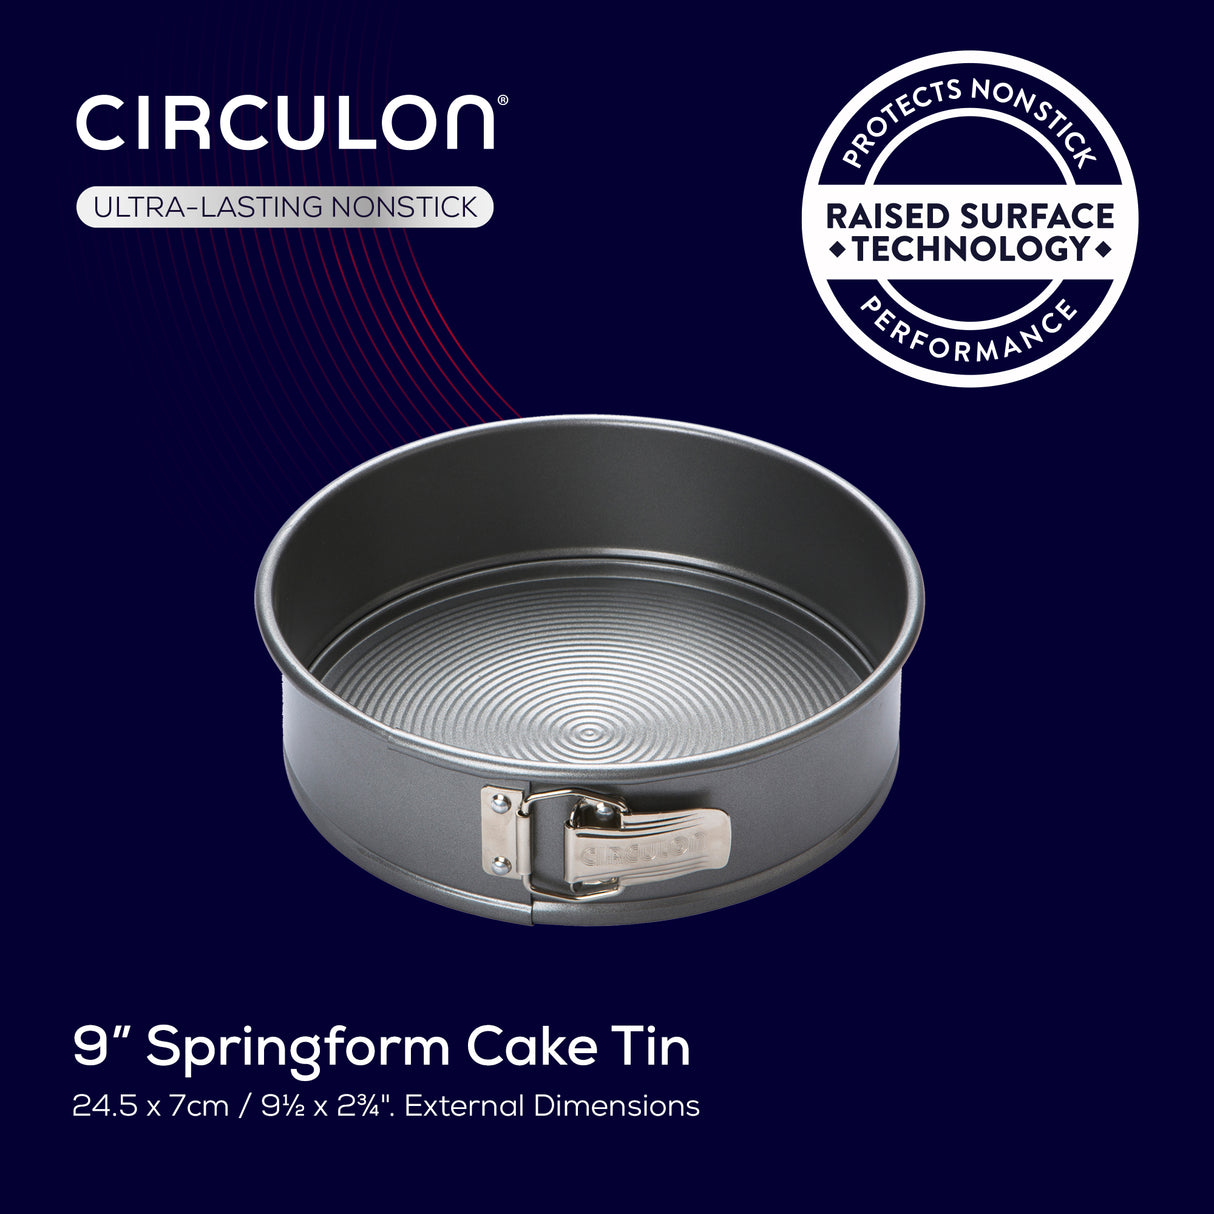 Circulon Momentum 9" Springform Cake Tin